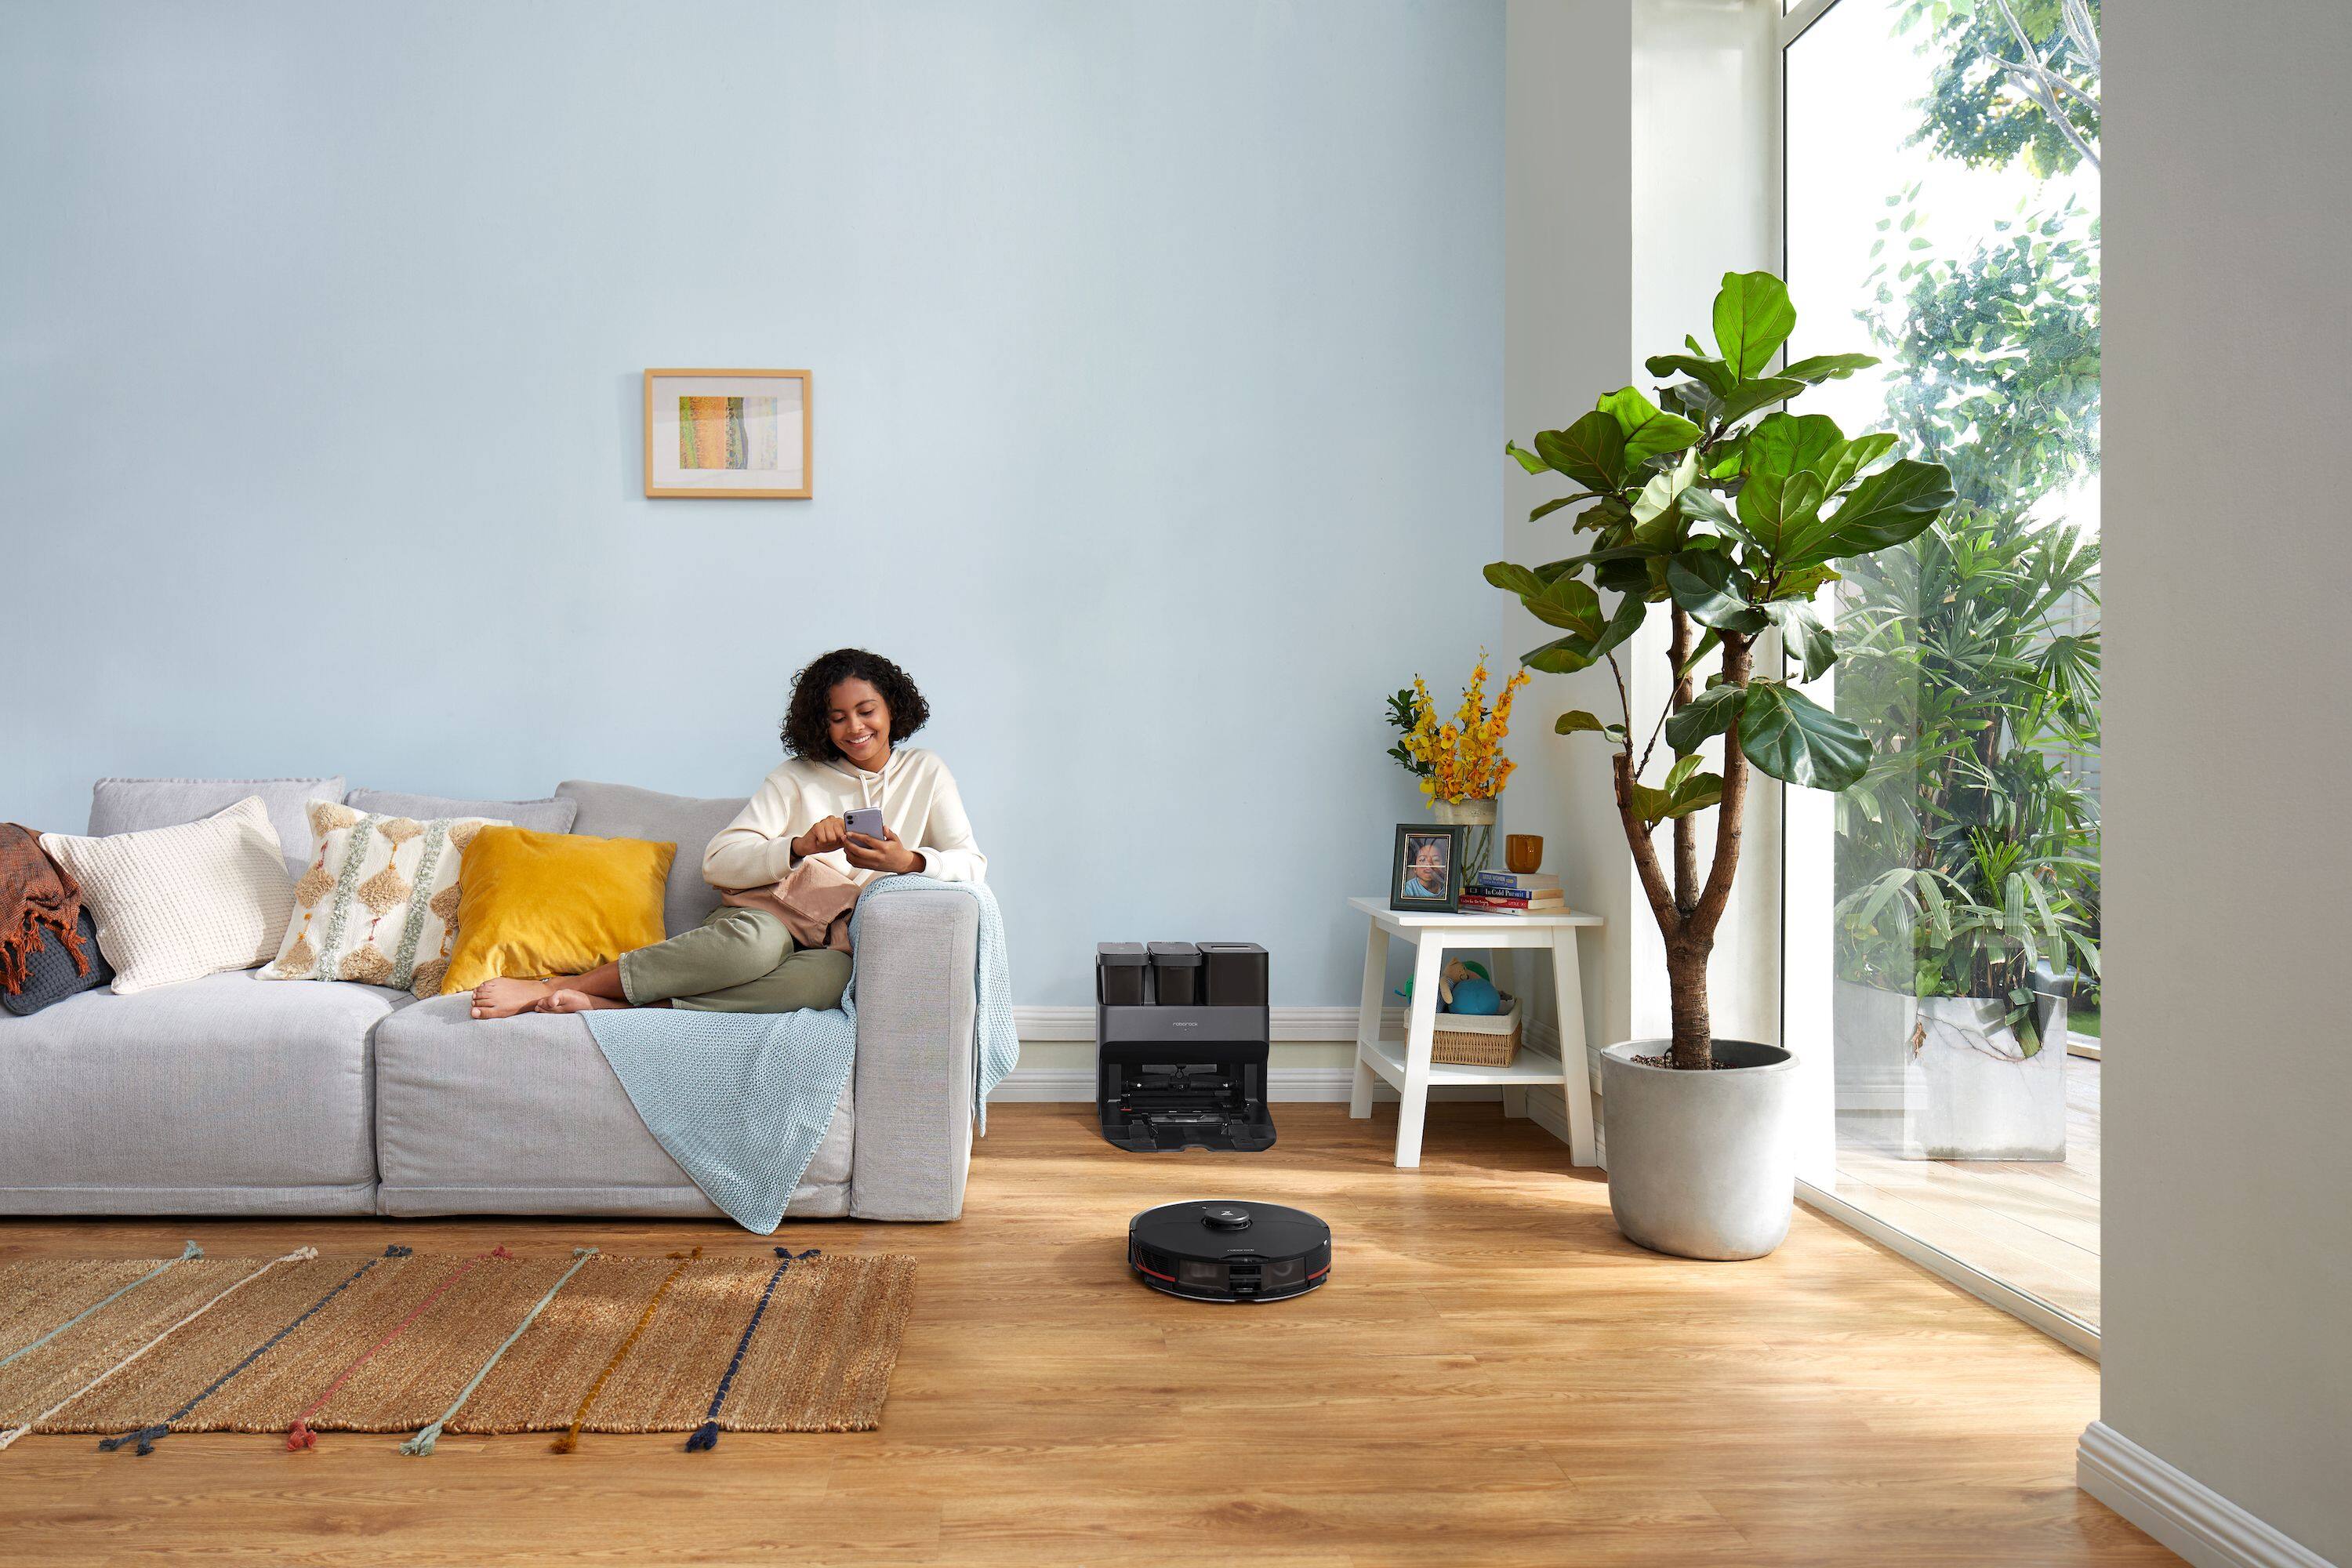 Smart Home, Stylish Home: Integrating Technology into Decor